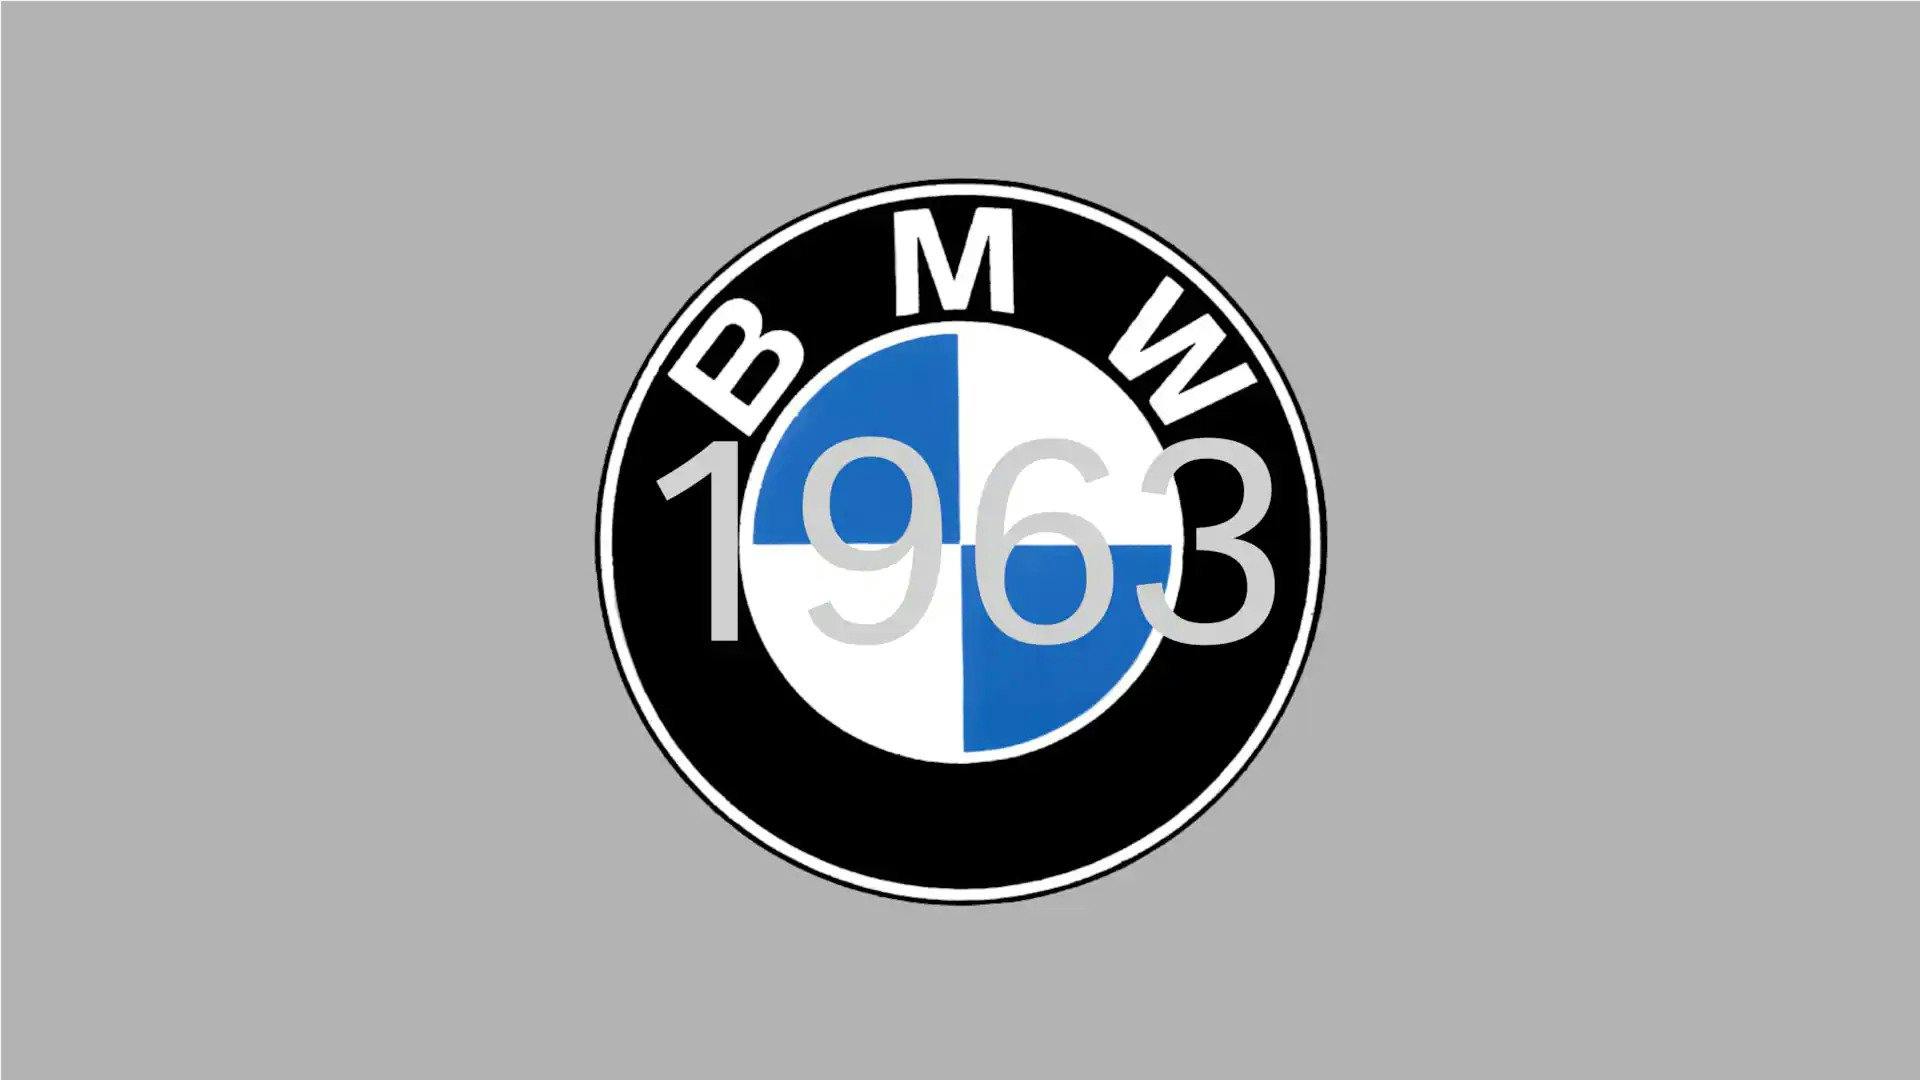 BMW 1963 logo